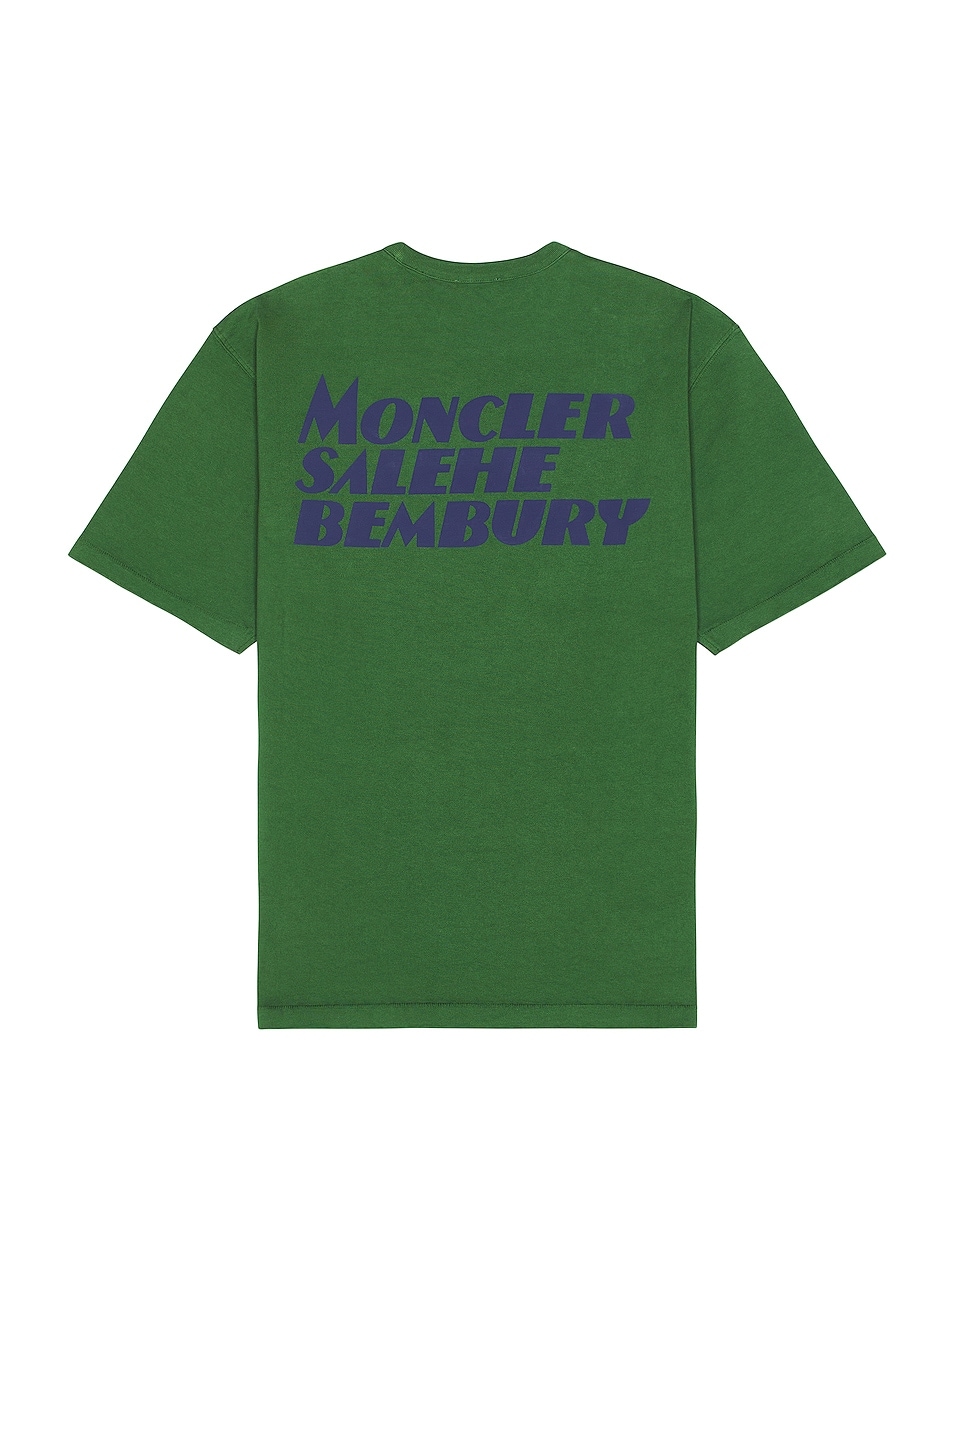 X Salehe Bembury Logo T-Shirt In Green.